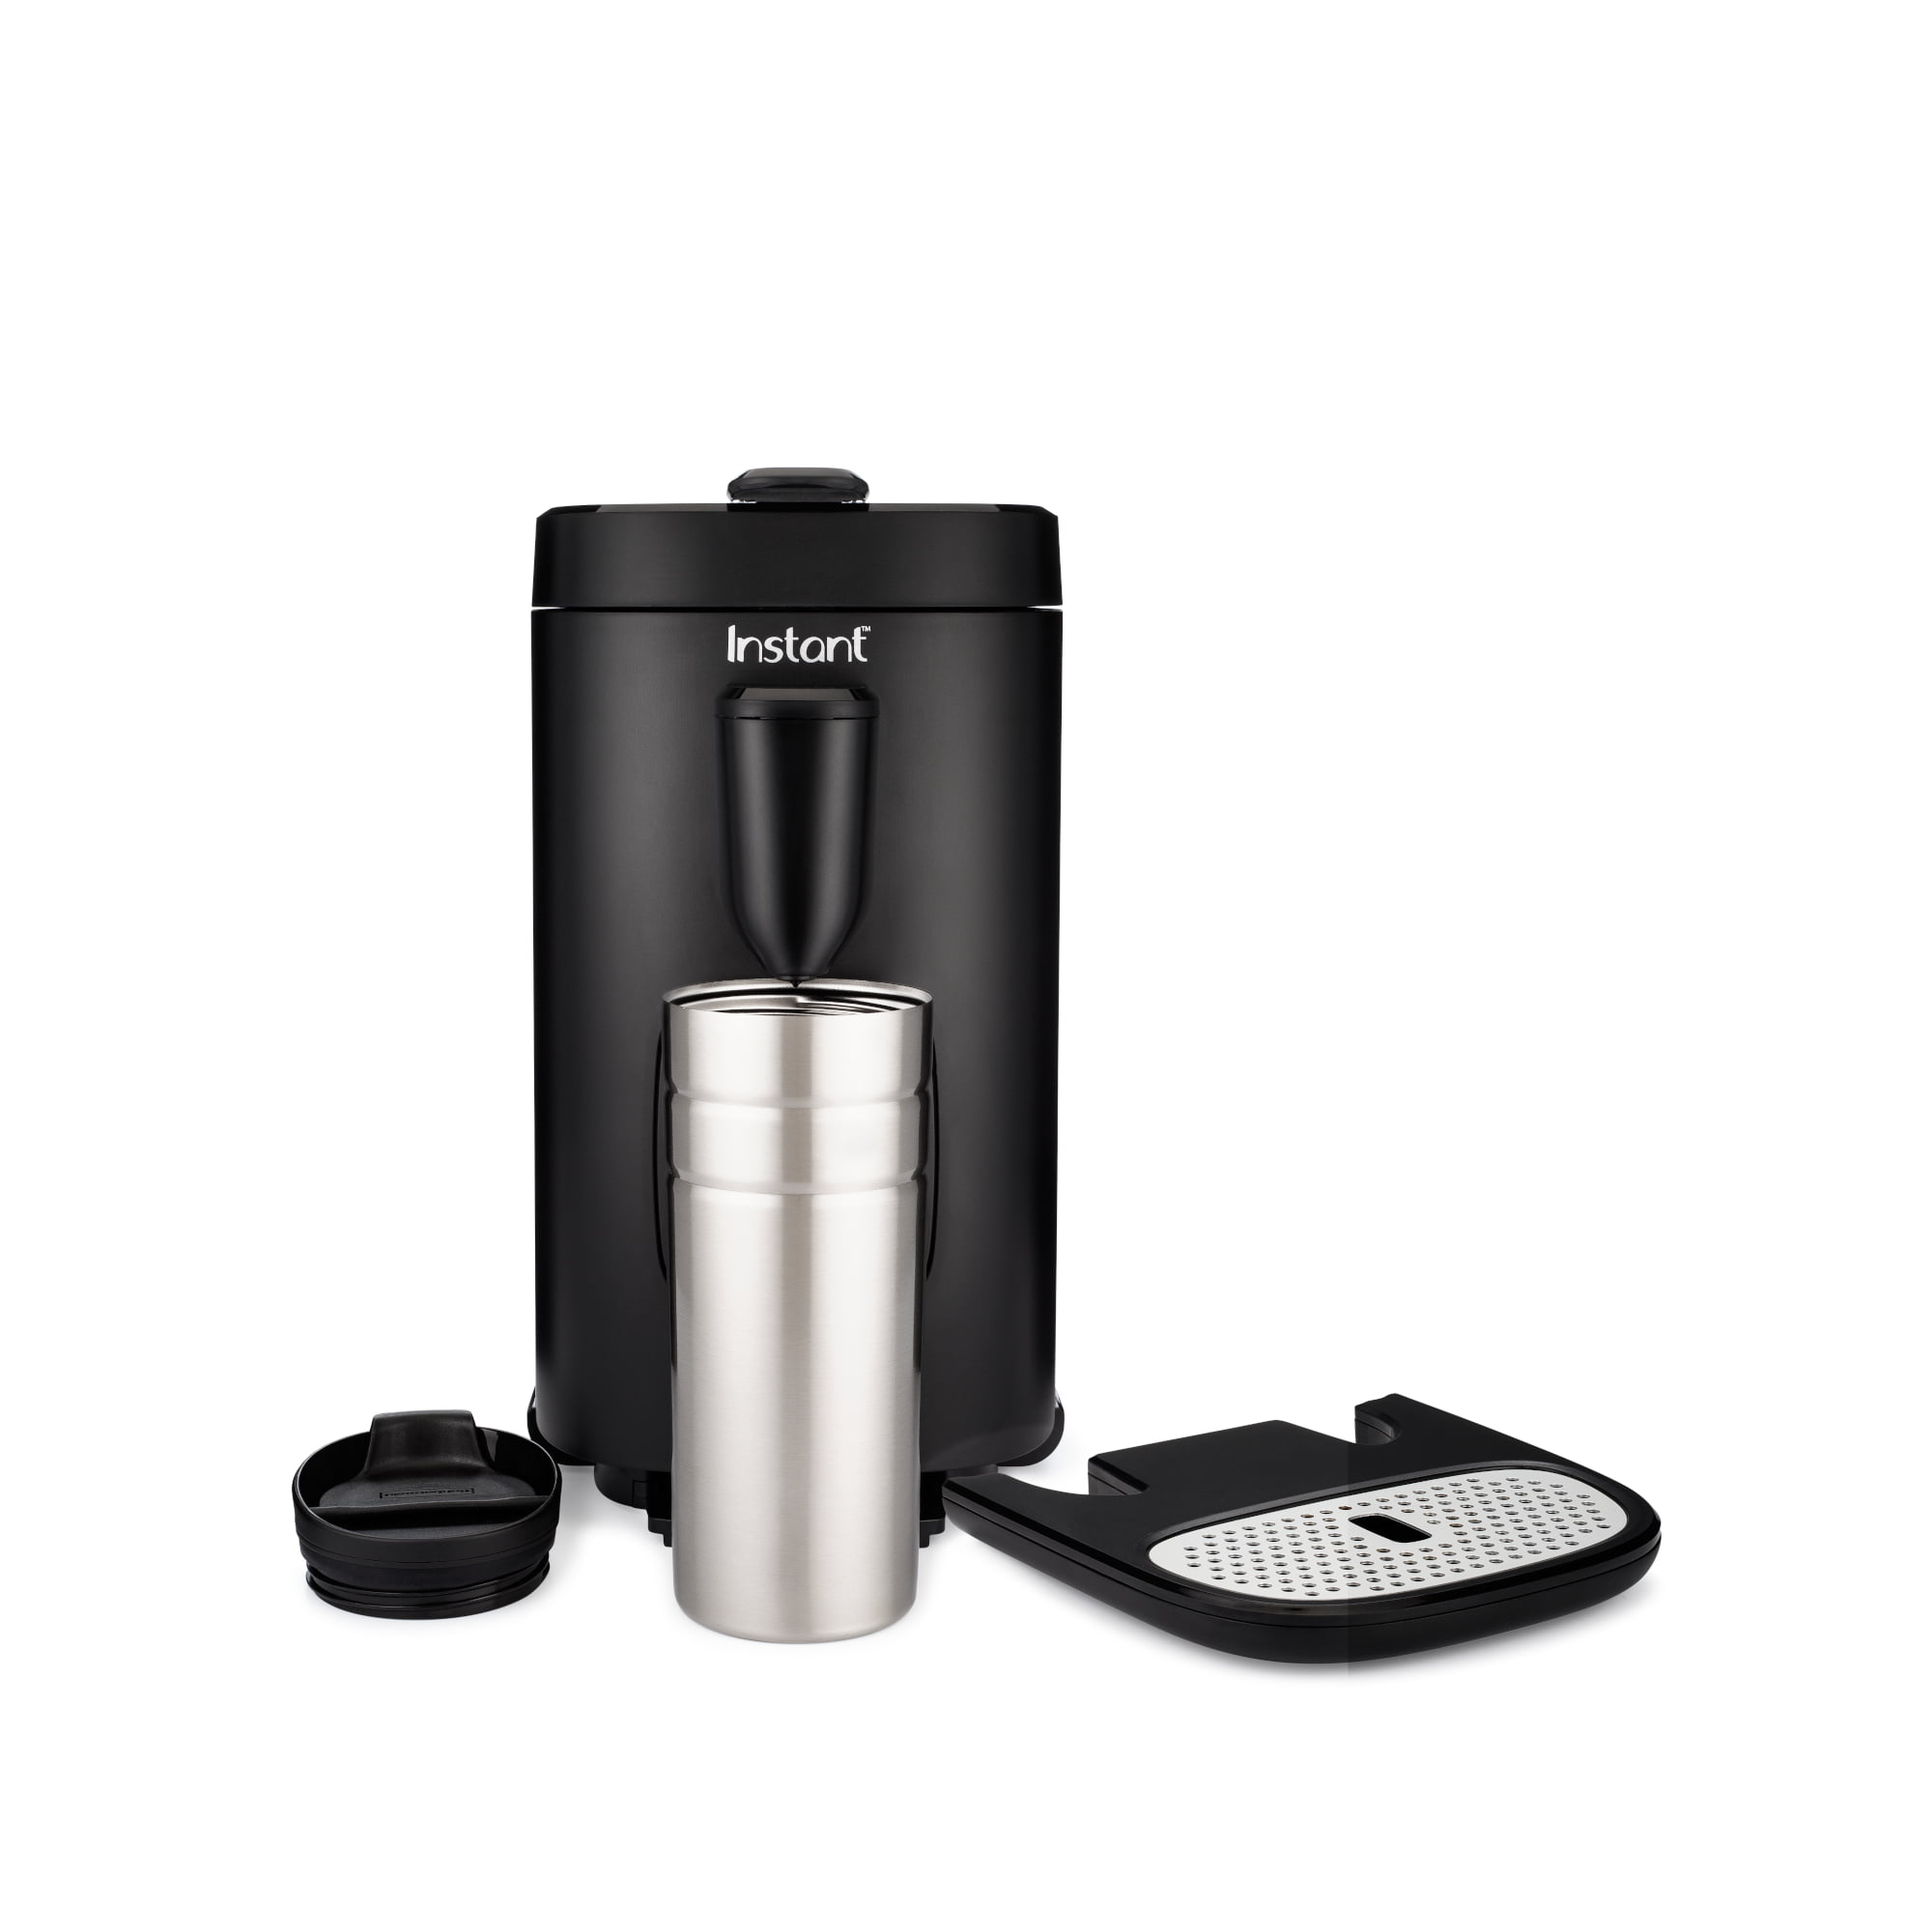 Instant Pot Solo Café 2-in-1 Single Serve Coffee Maker Just $25 (Reg. $76)